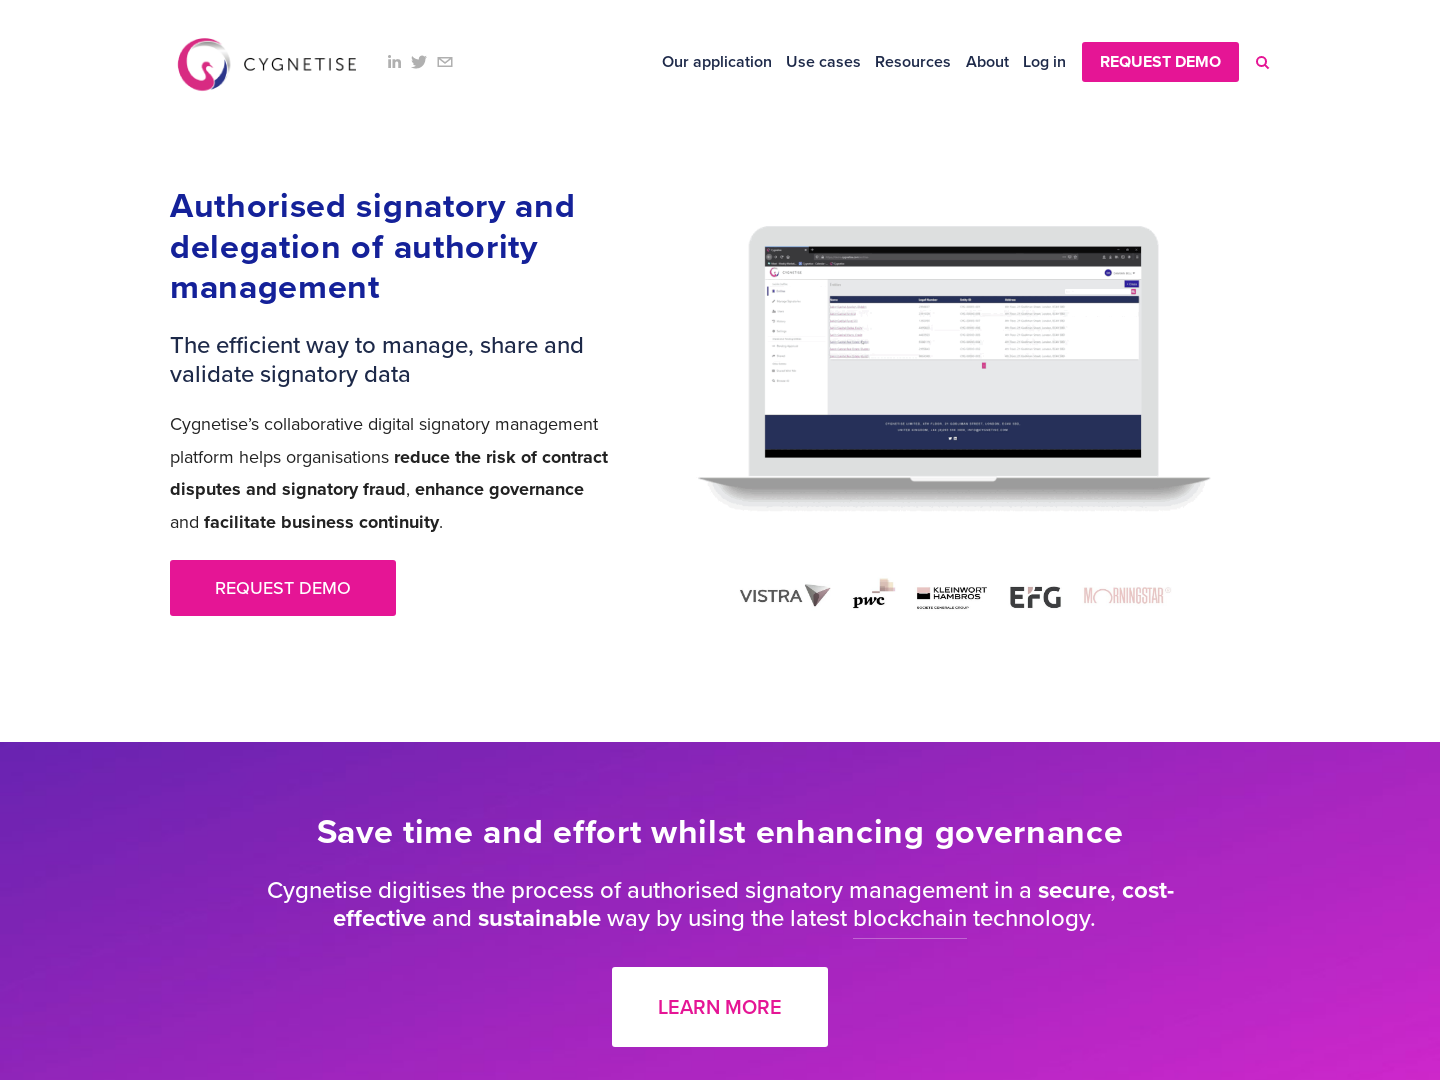 "Cygnetise Secures £2.5M Funding for Signatory Data Platform"